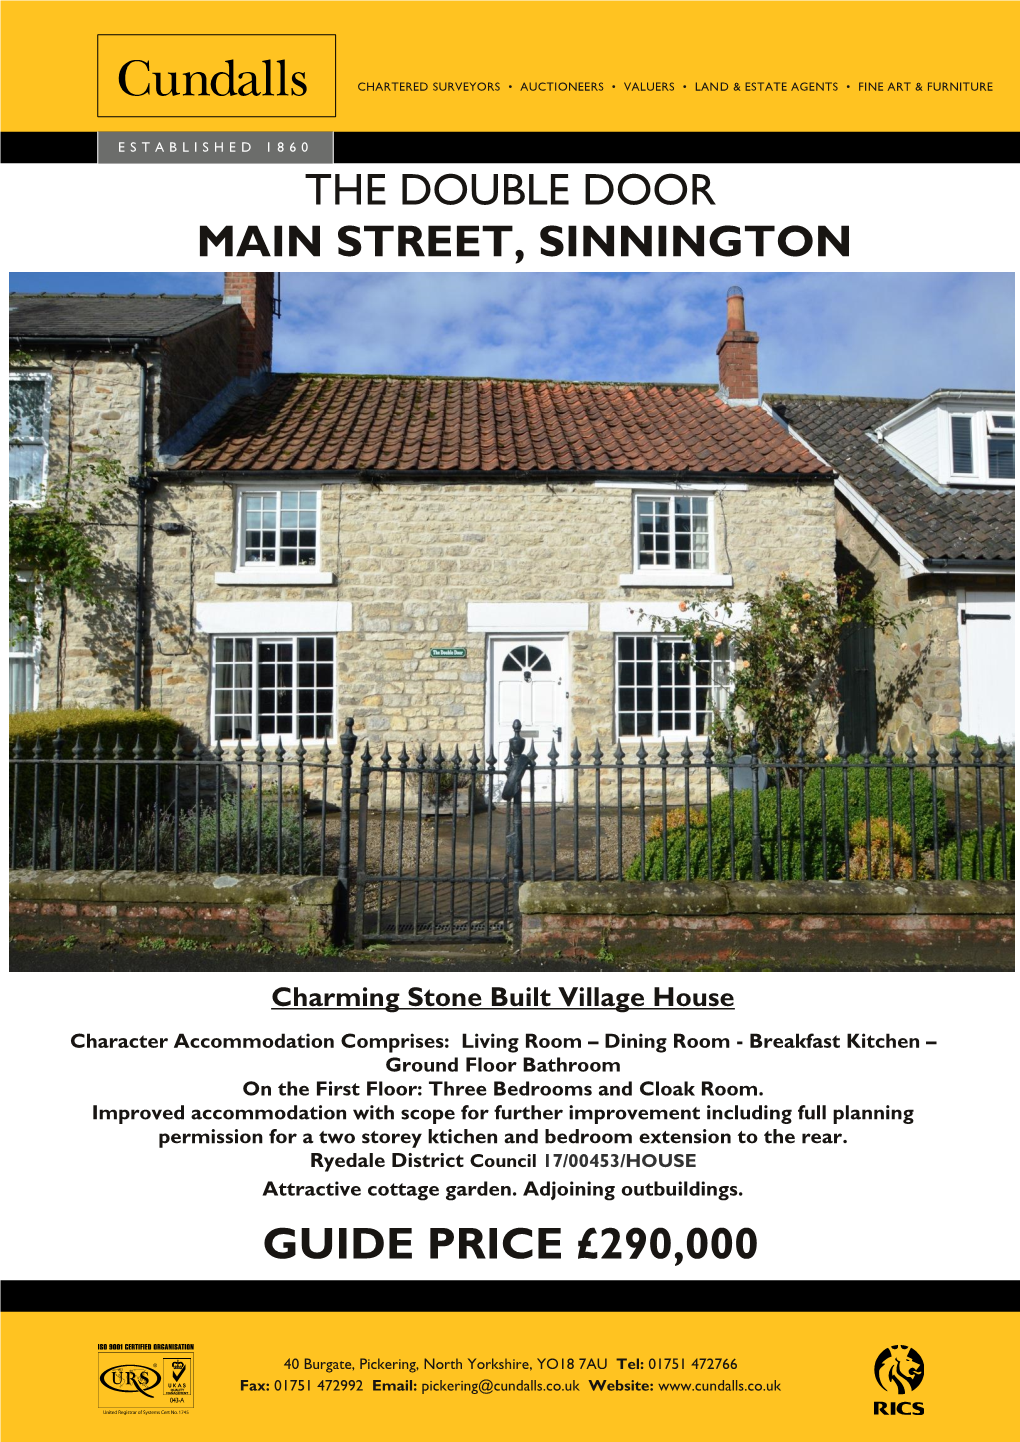 The Double Door Main Street, Sinnington Guide Price